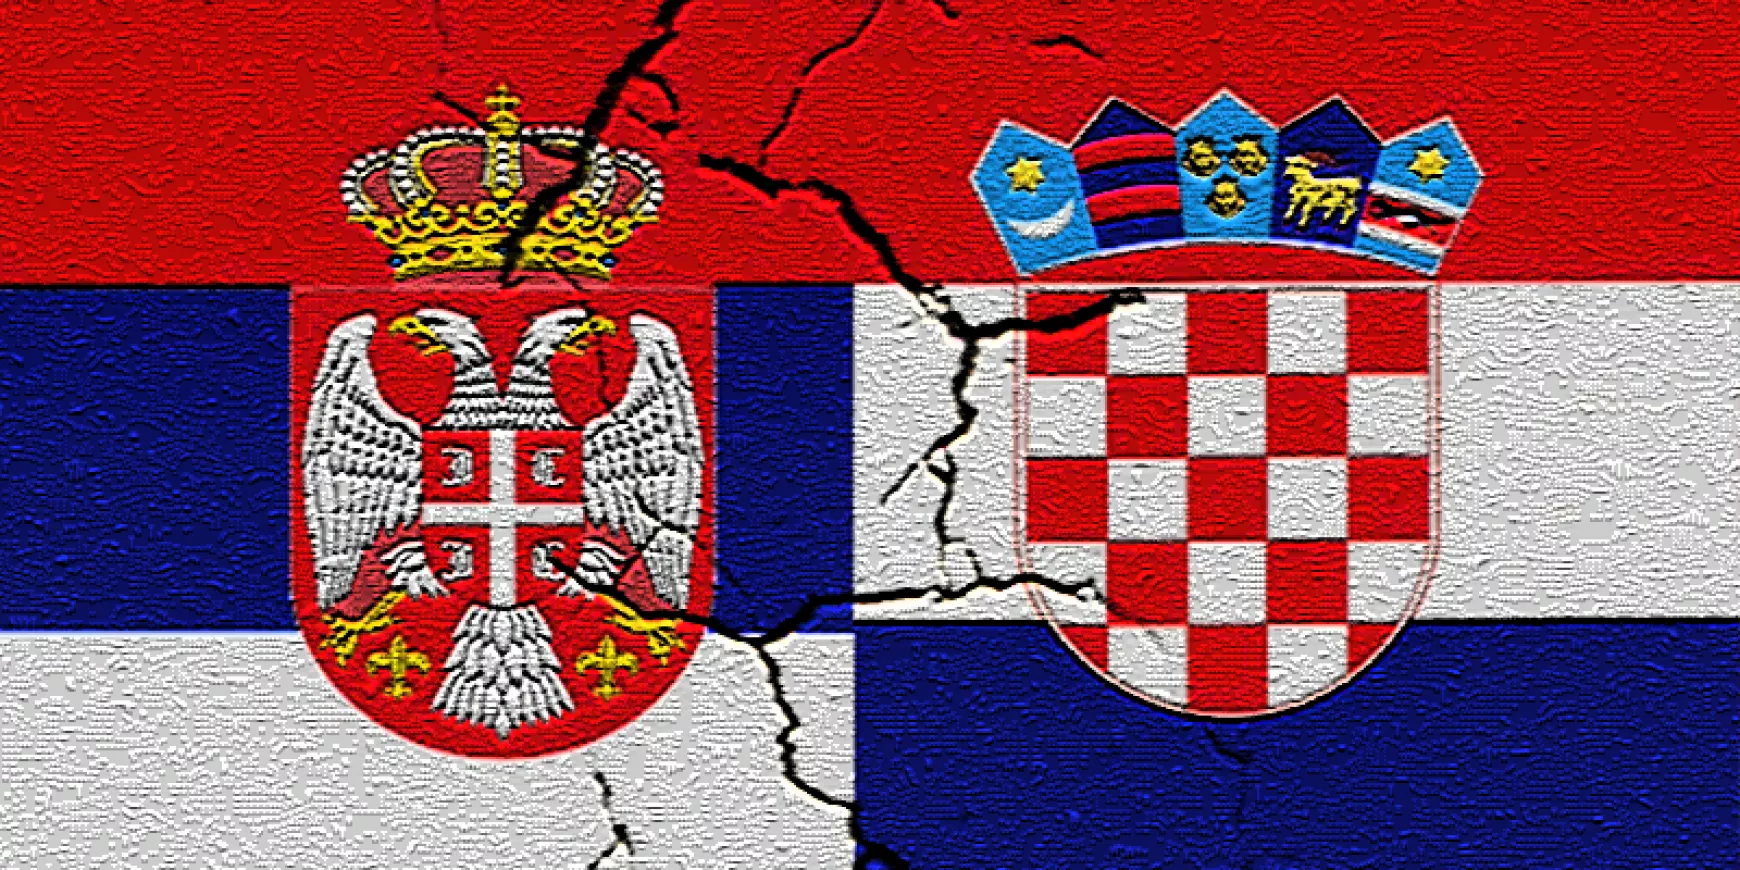 szerb-horvat_konfliktus_vucic.png